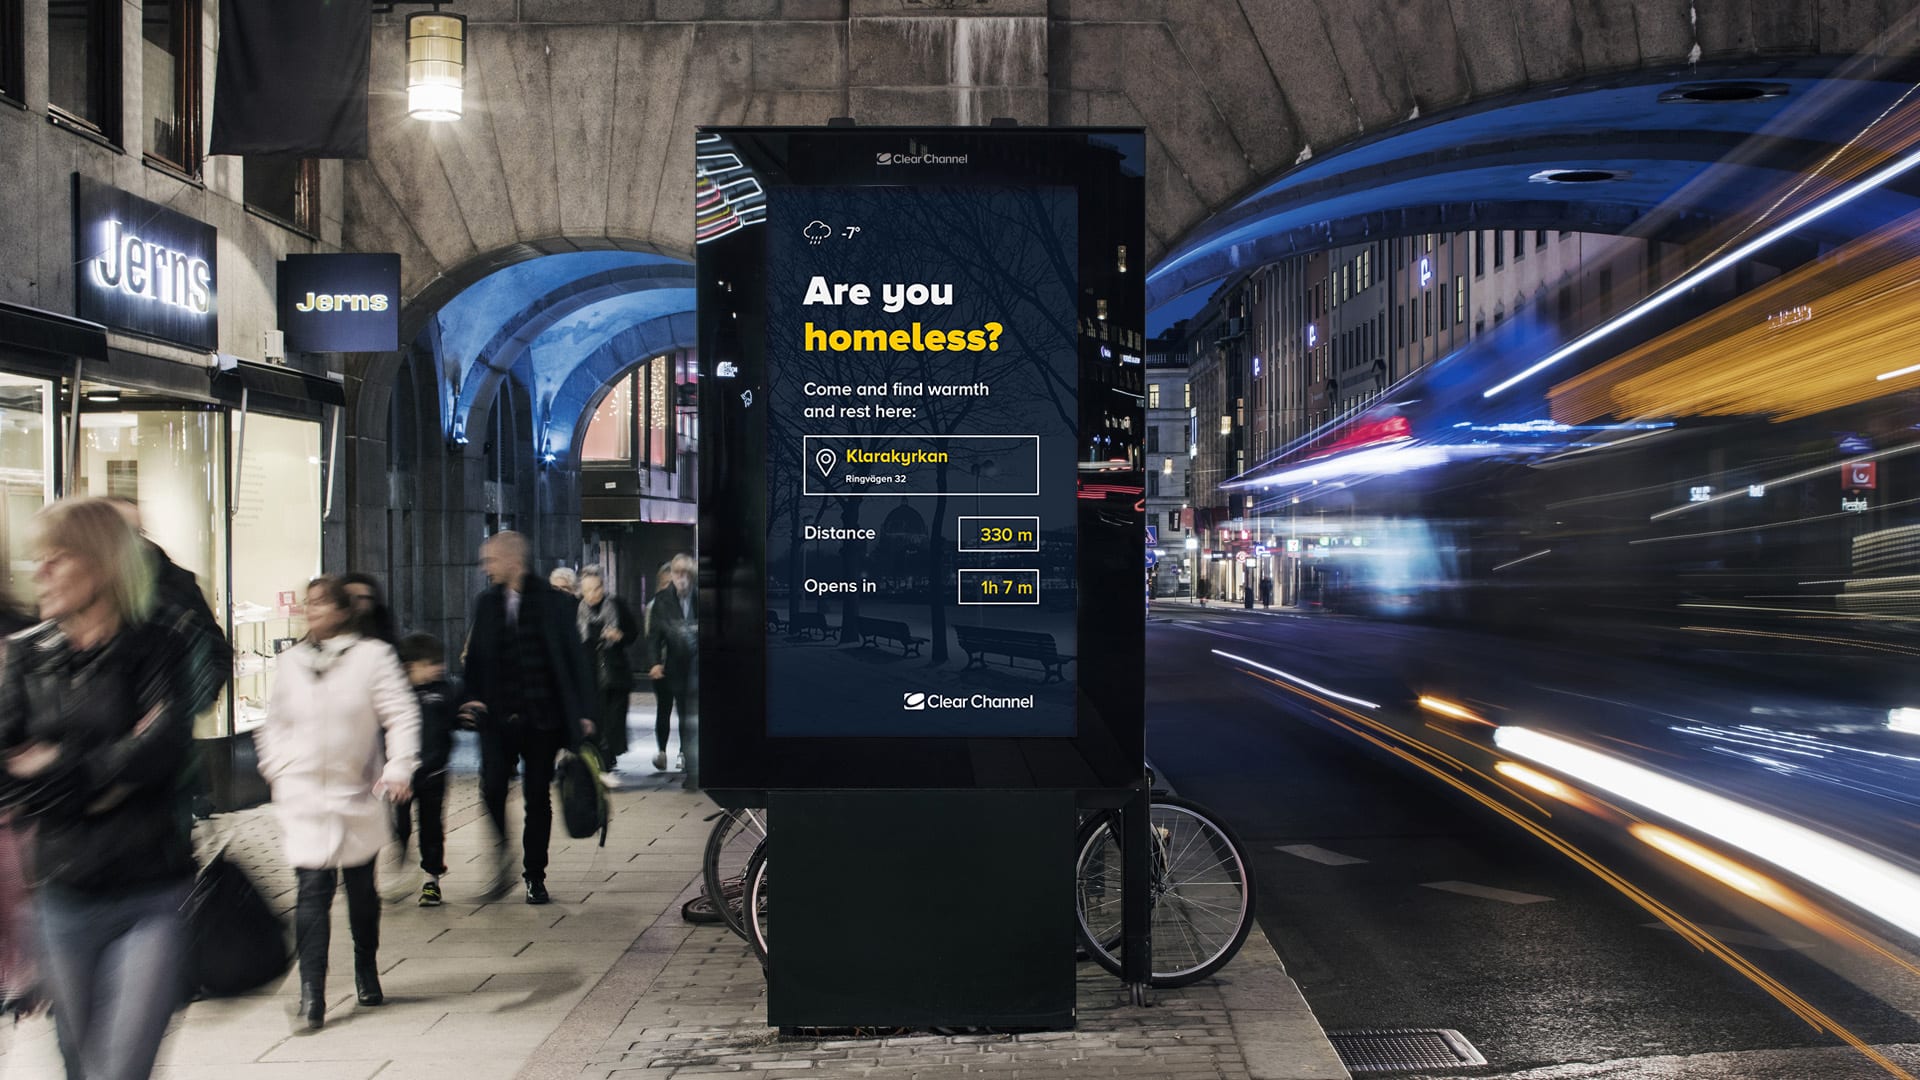 These digital ads help Stockholm’s homeless find shelter